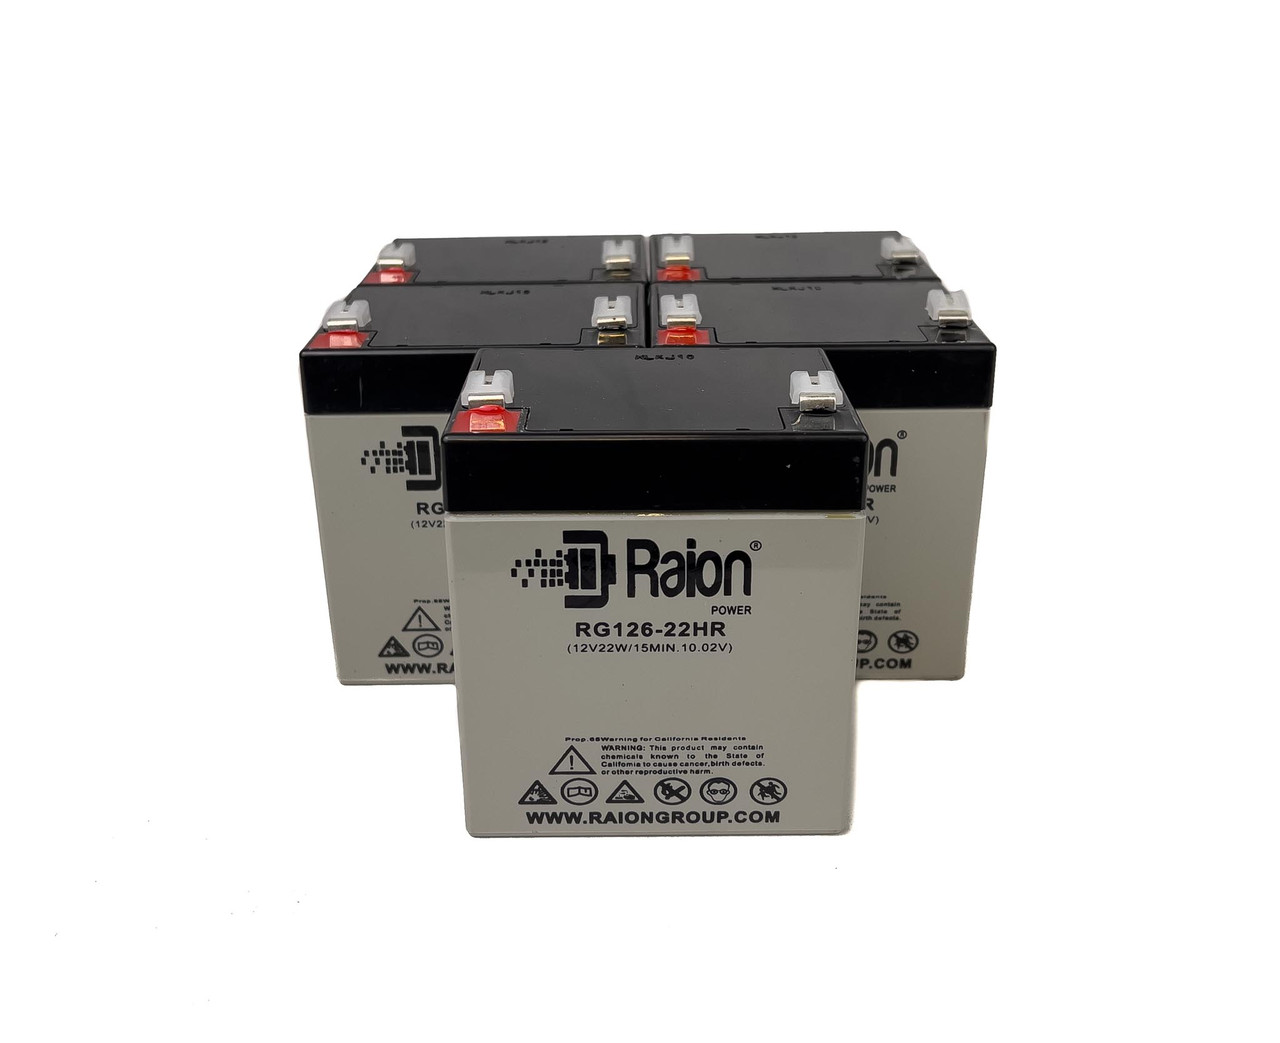 Raion Power RG126-22HR 12V 5.5.5Ah Replacement Battery Cartridge for SigmasTek SP12-5.5HR - 5 Pack